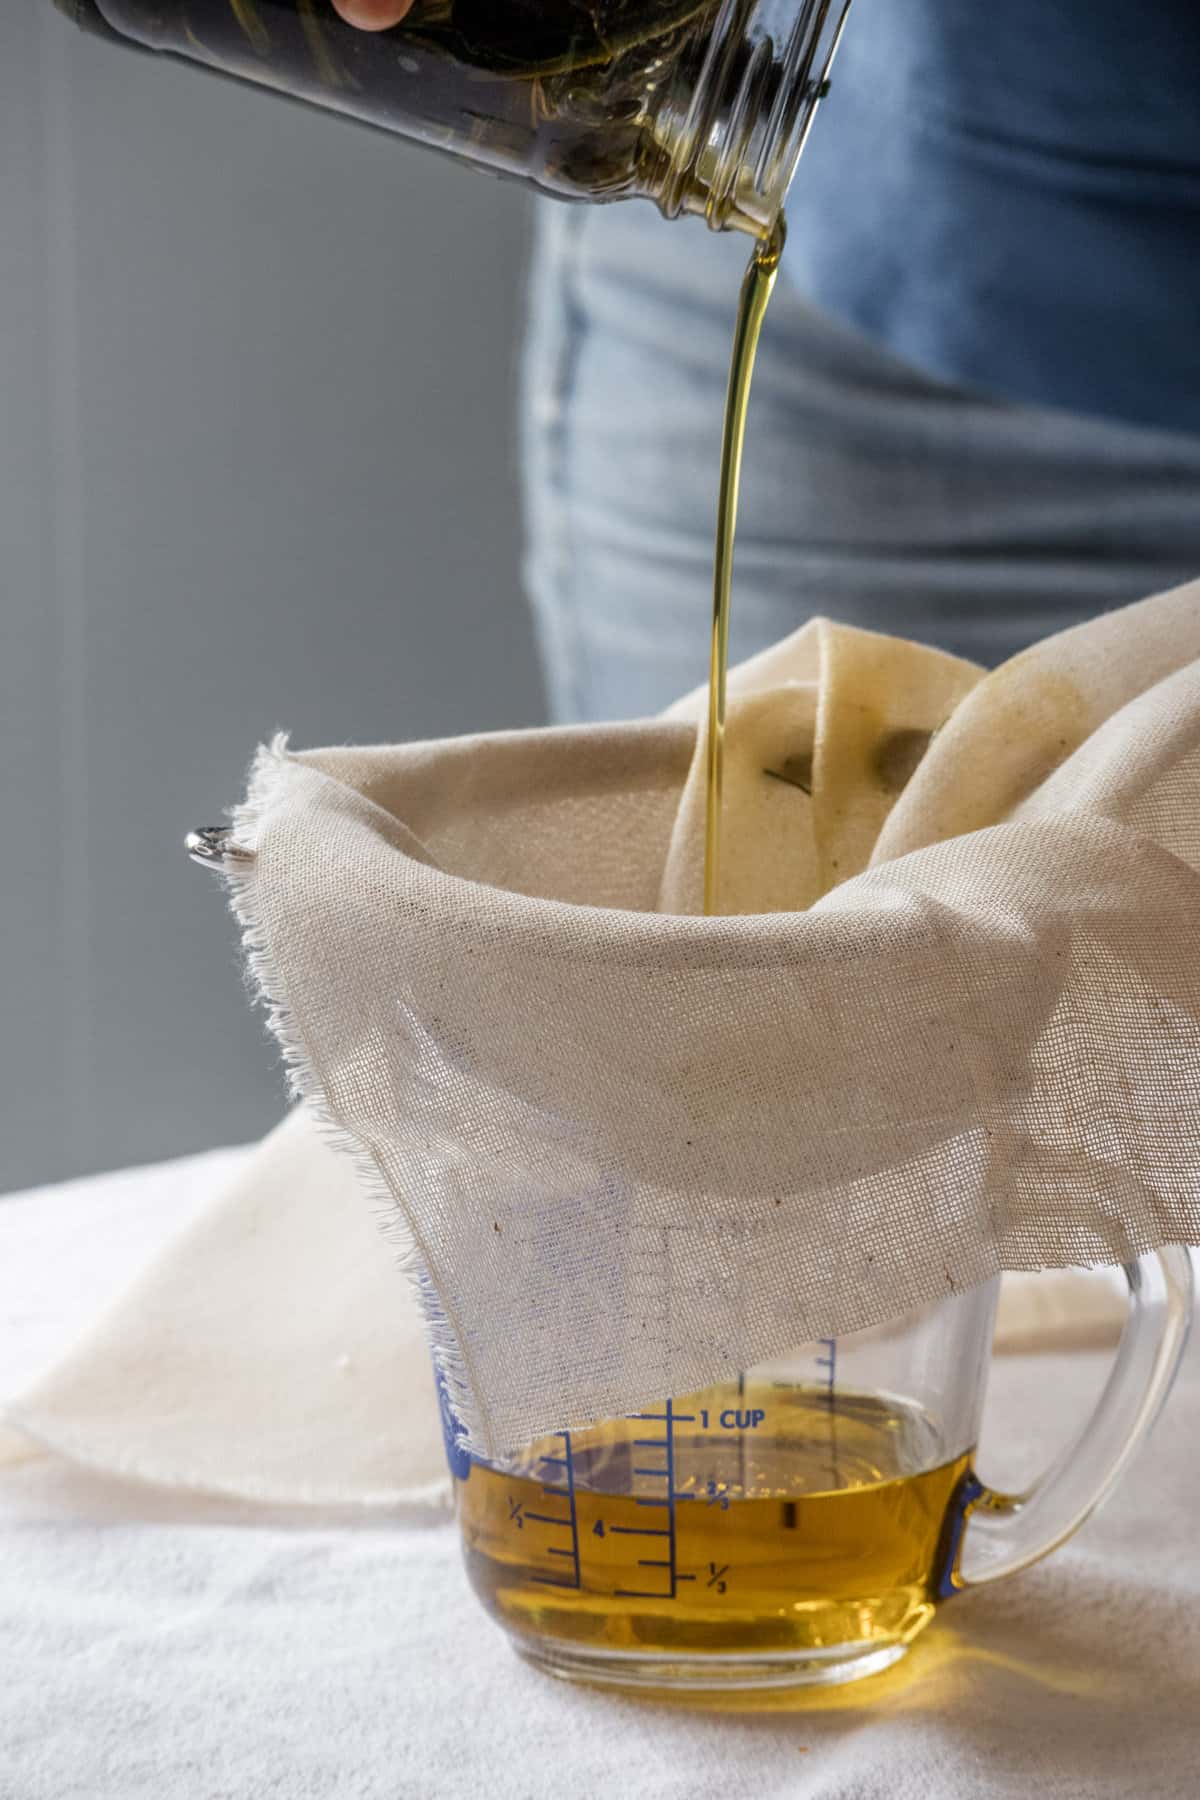 Straining homemade comfrey oil through a cheesecloth